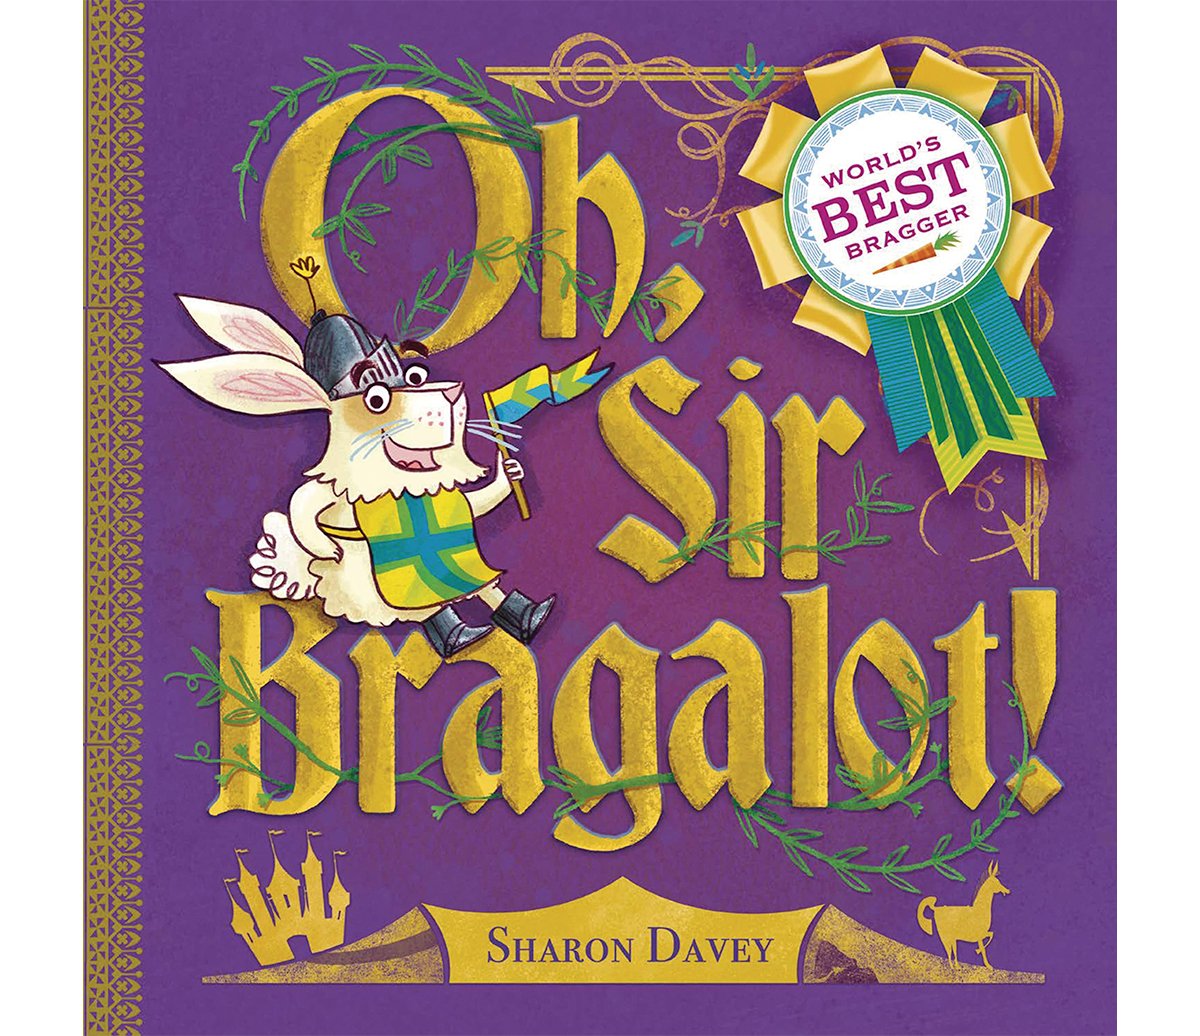 sharon-davey-sir-bragalot-cover.jpg